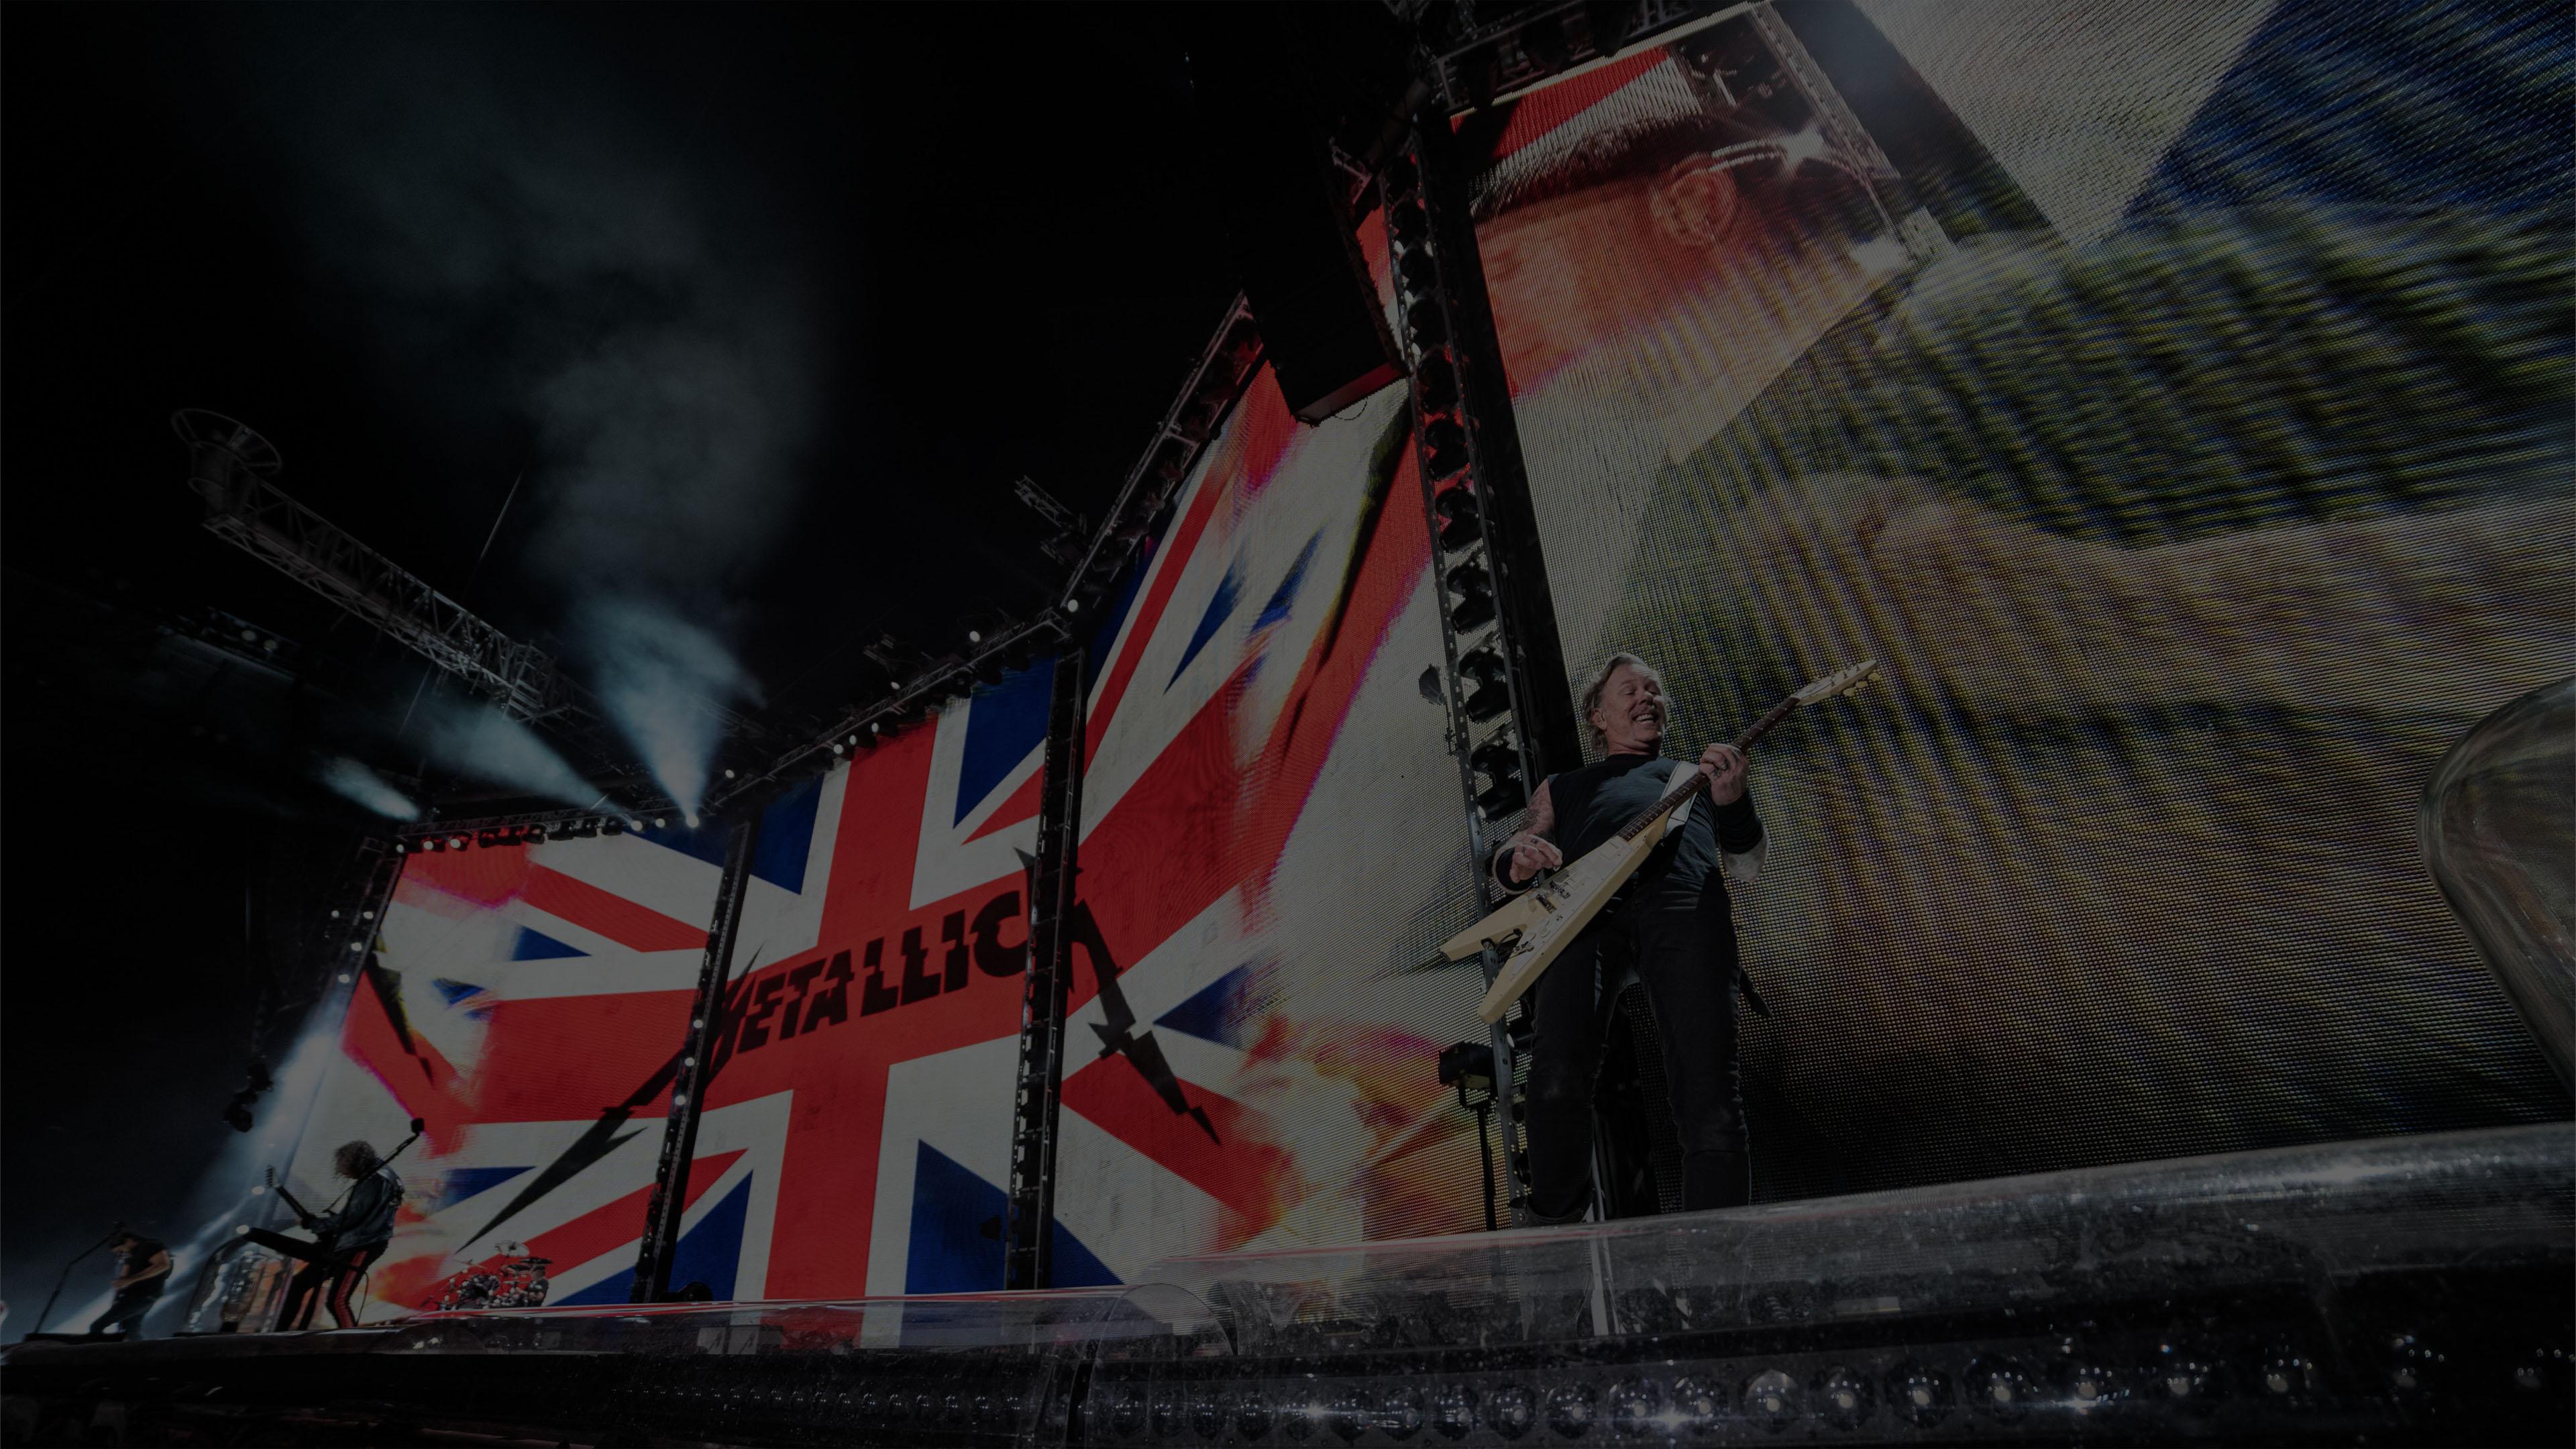 Metallica at Twickenham Stadium in London, England on June 20, 2019